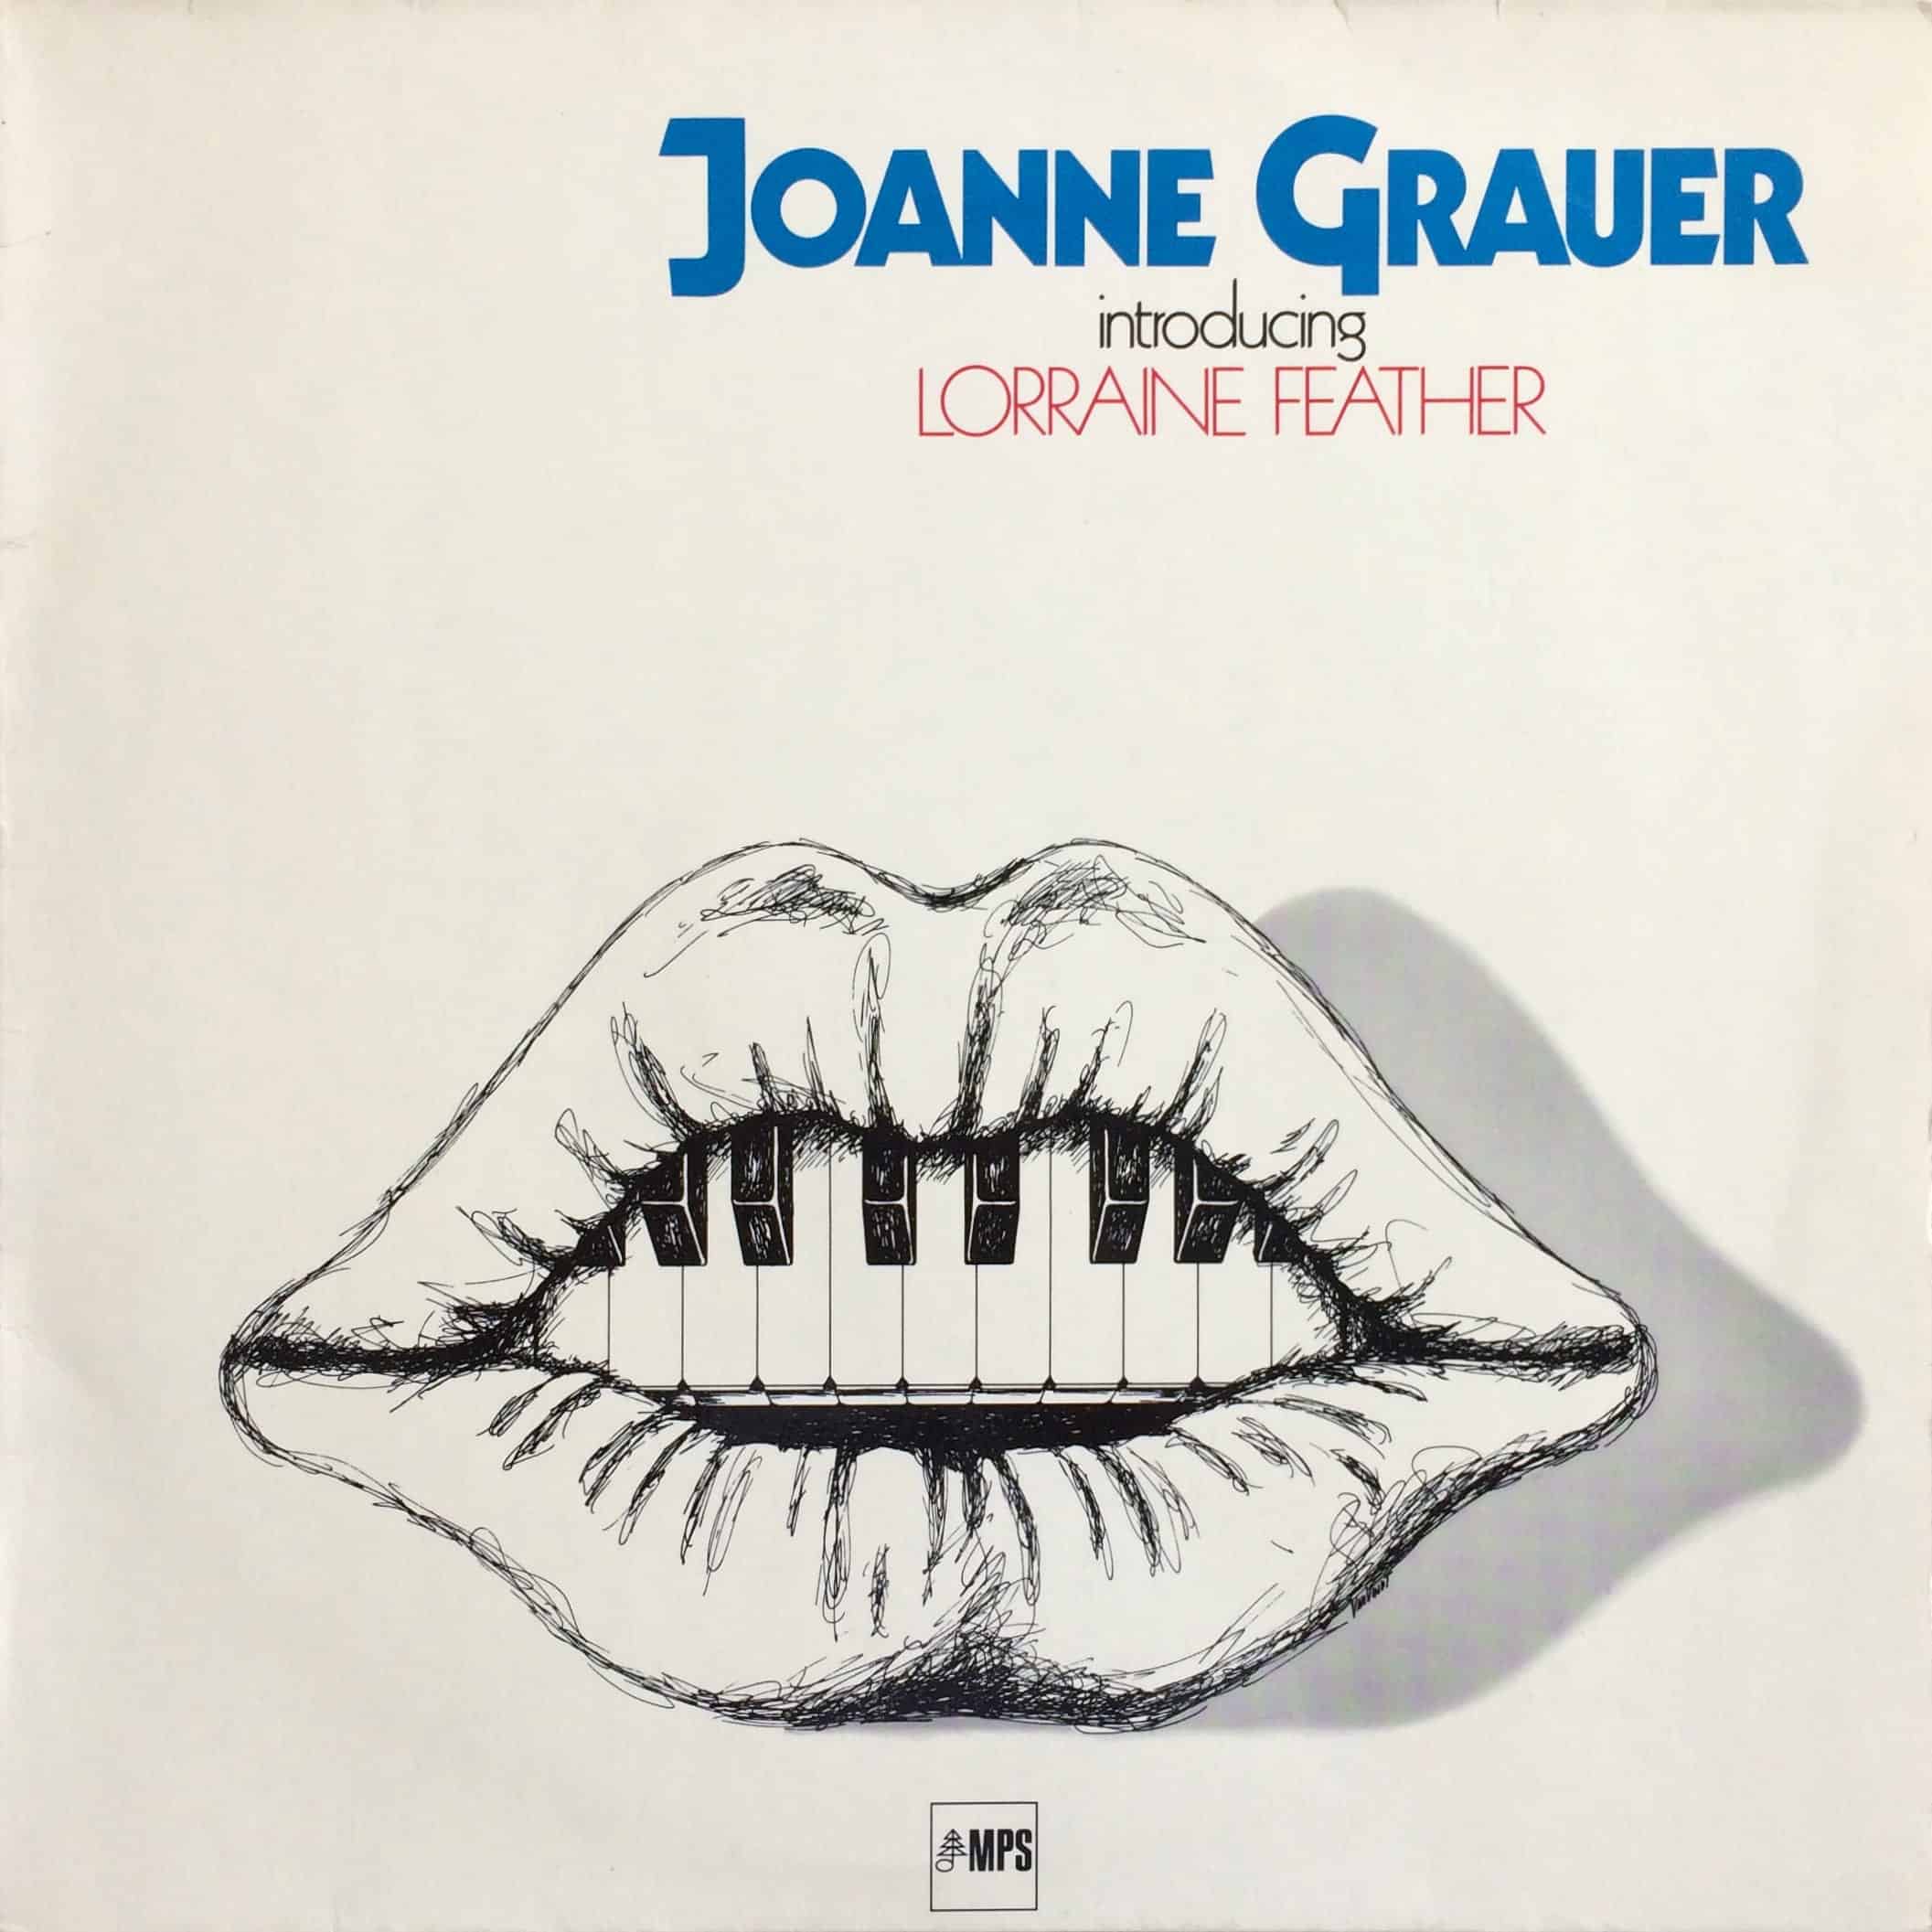 Joanne Grauer introducing Lorraine Feather ‎– Joanne Grauer introducing Lorraine Feather